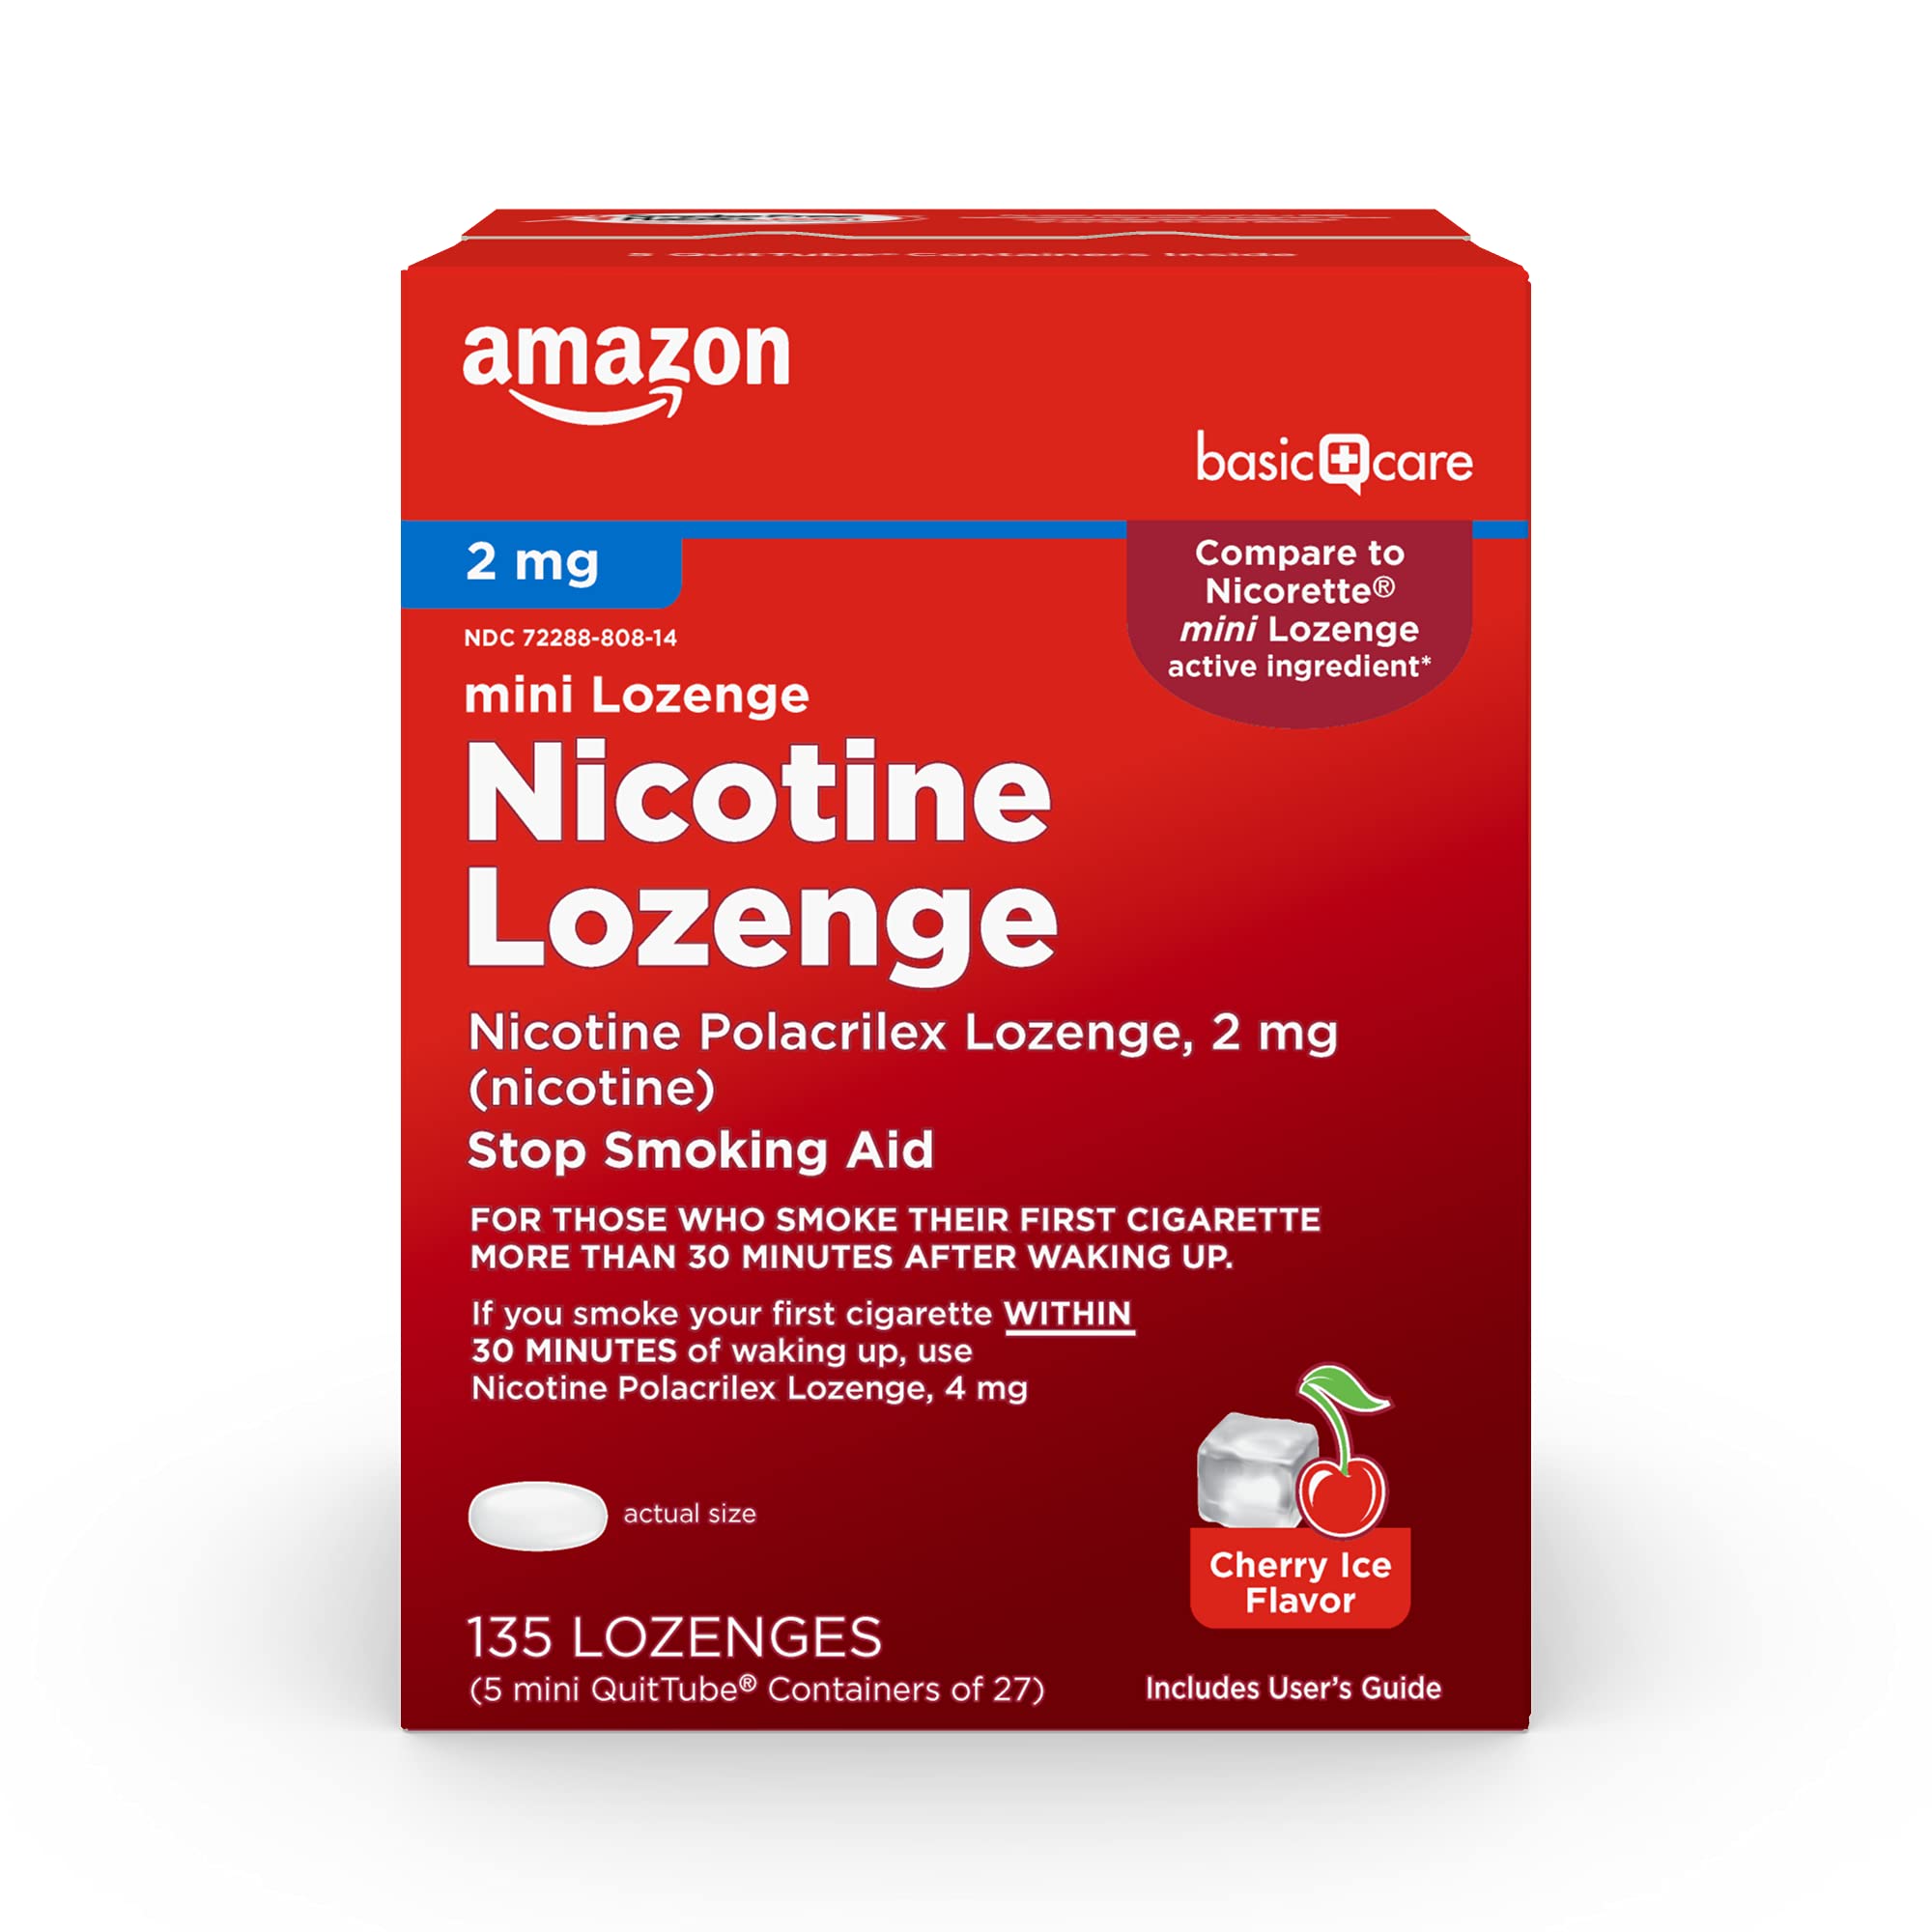 Amazon Basic care Nicotine Mini Lozenge, Stop Smoking Aid, Nicotine Polacrilex 2 mg (nicotine), cherry Ice Flavor